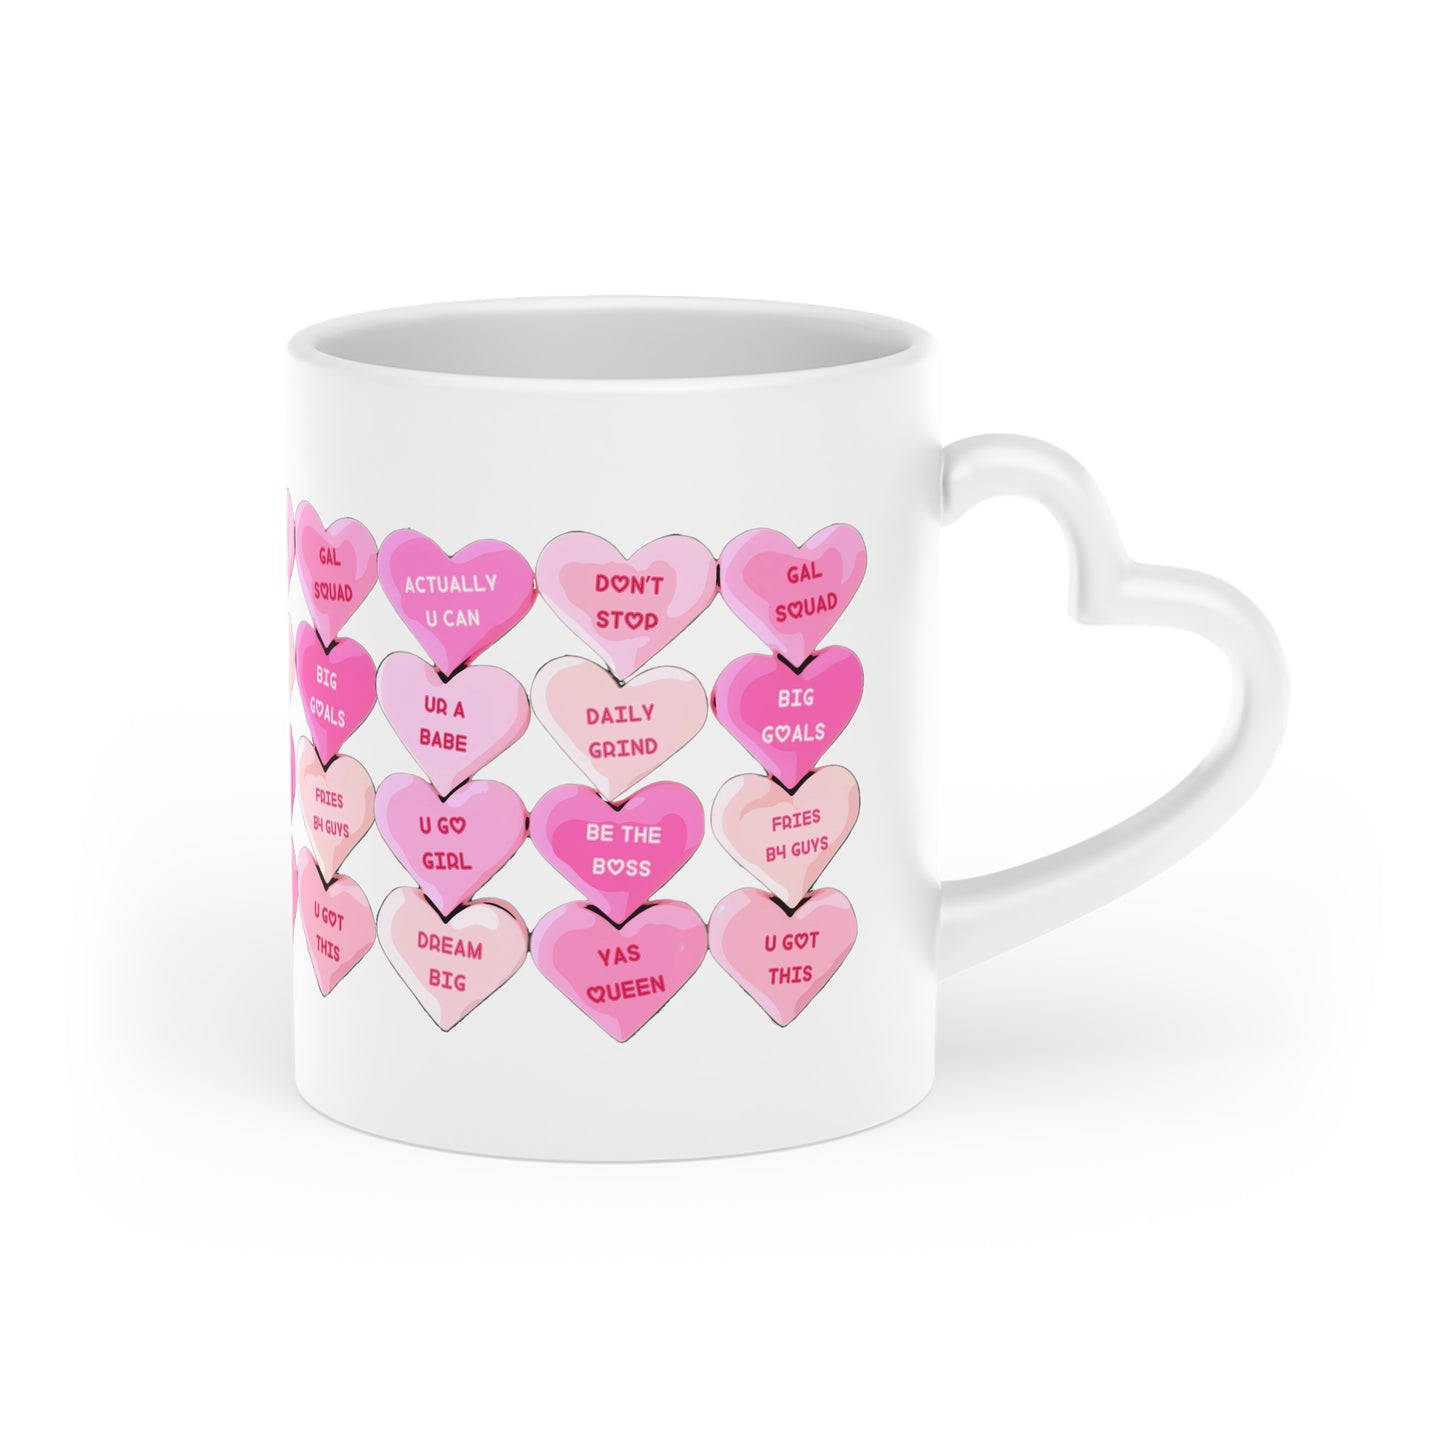 Candy Hearts - Heart Shaped Handle Mug